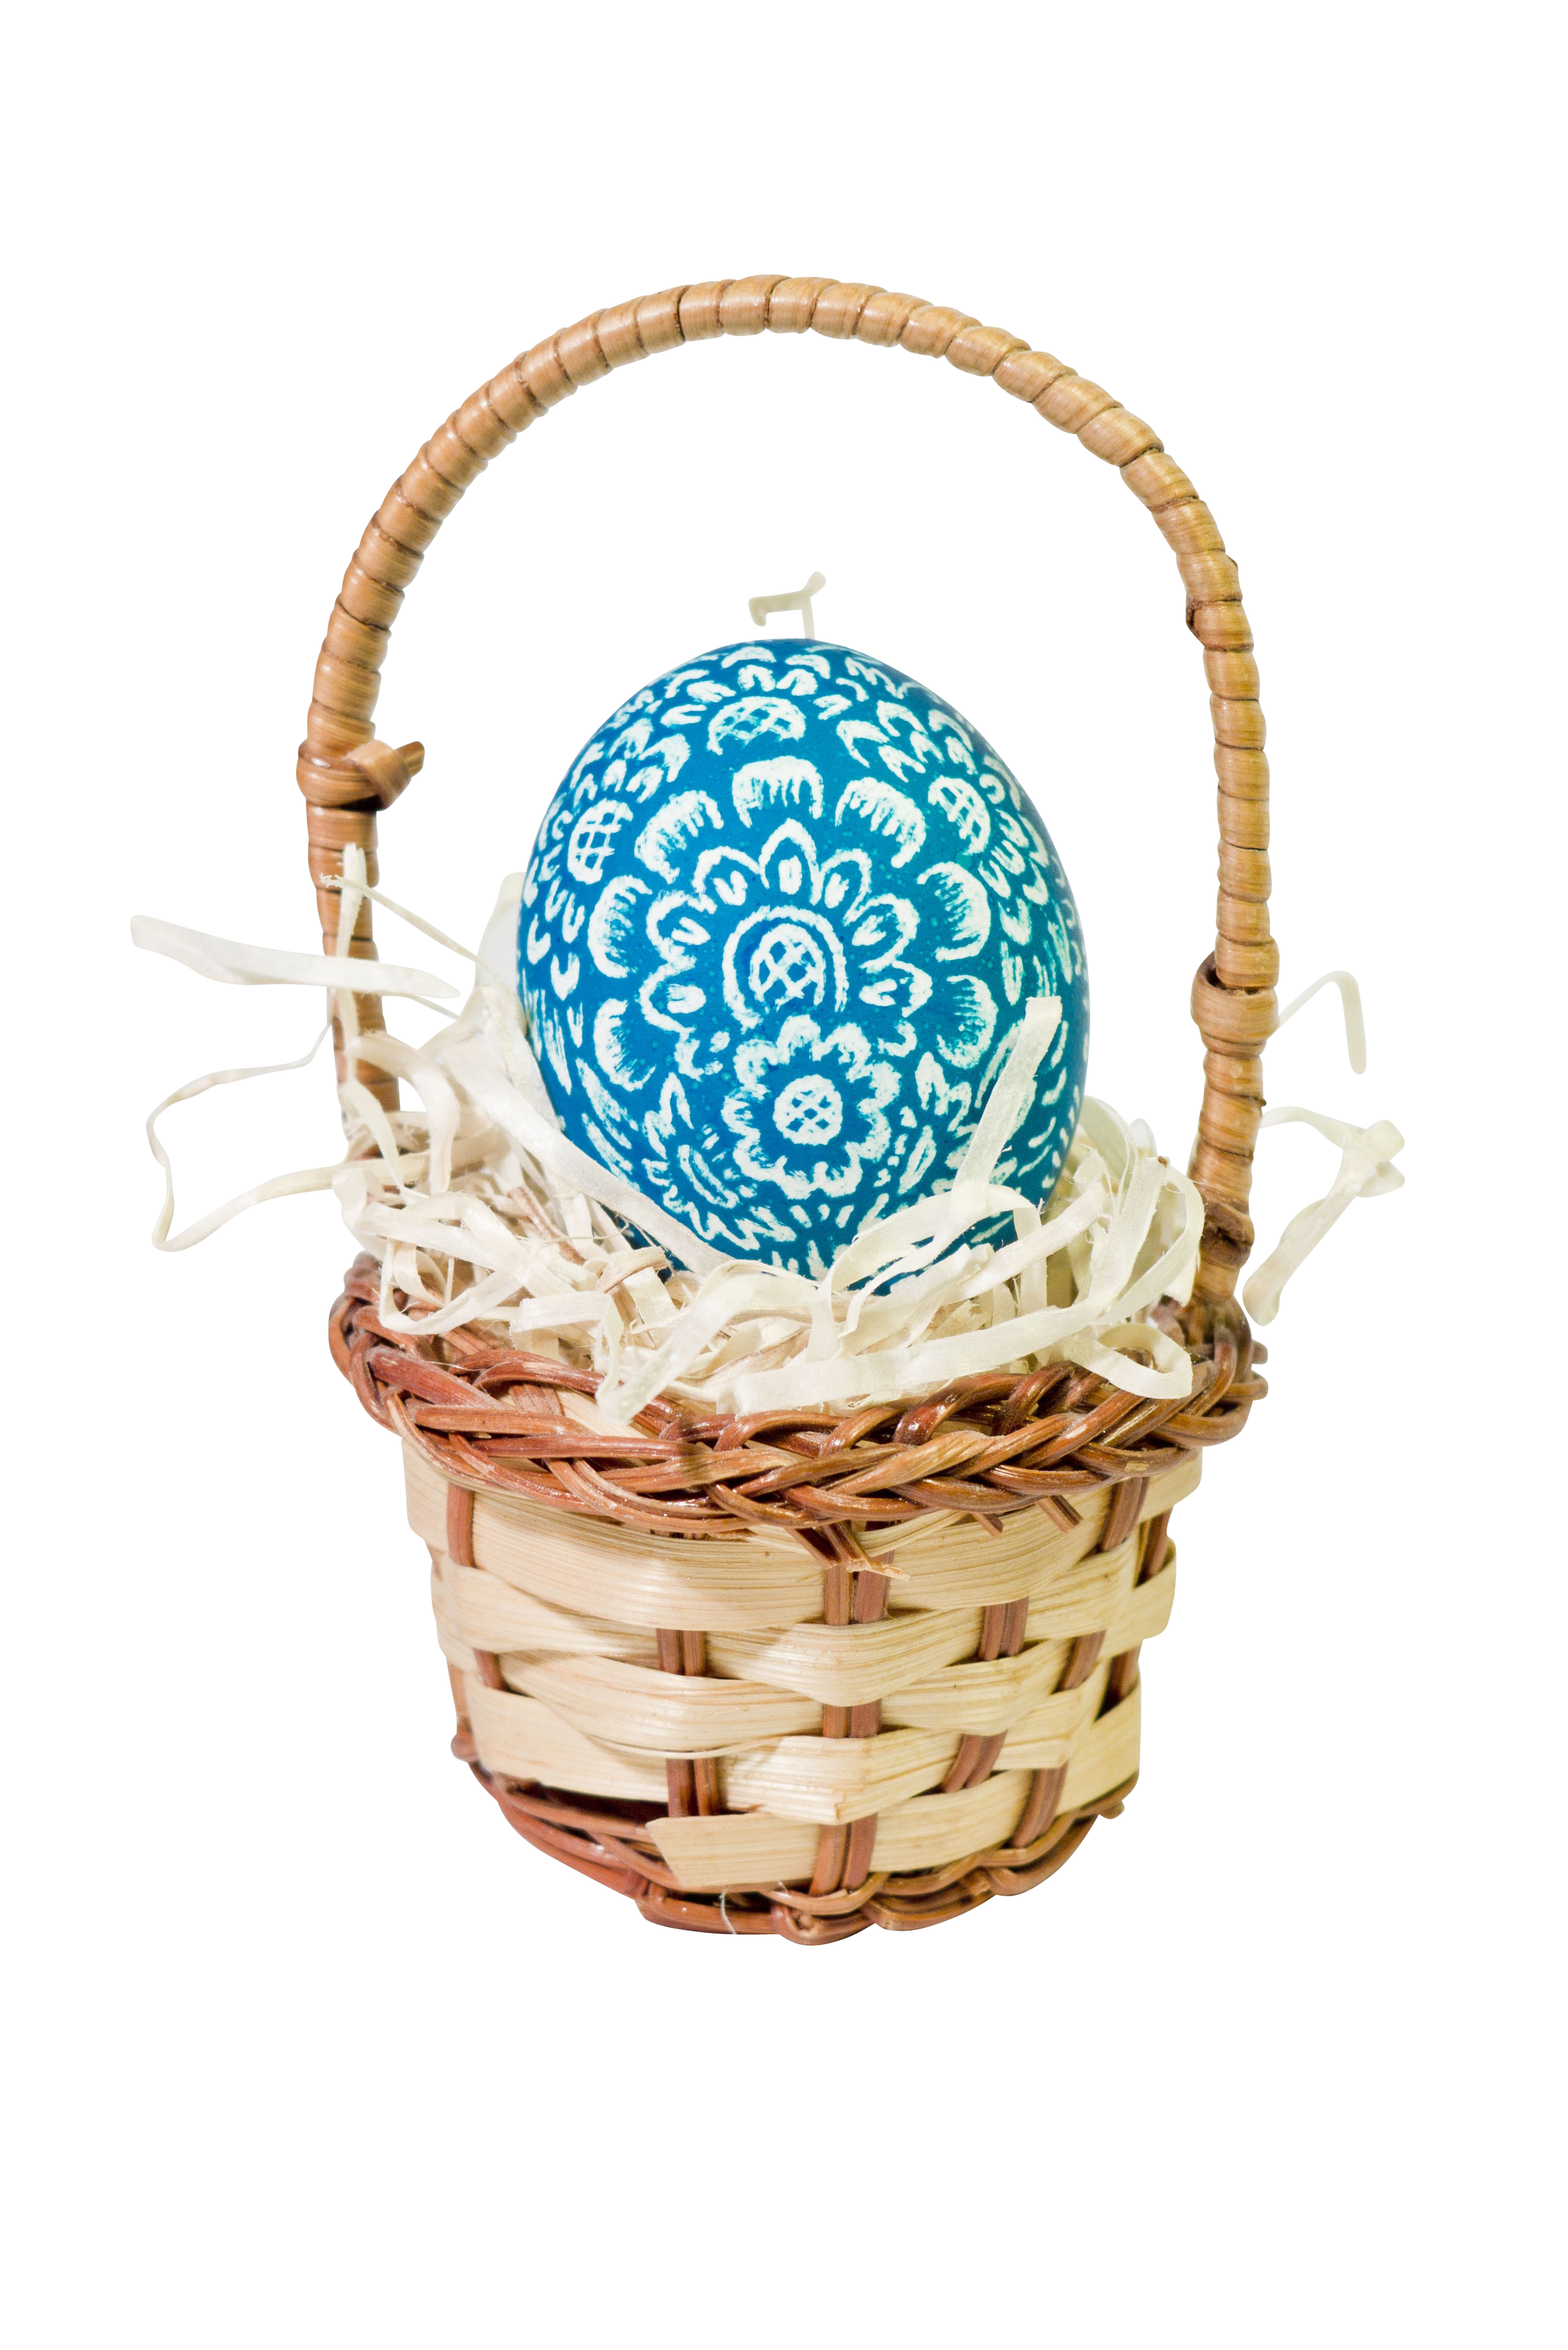 A Blue Egg In A Basket